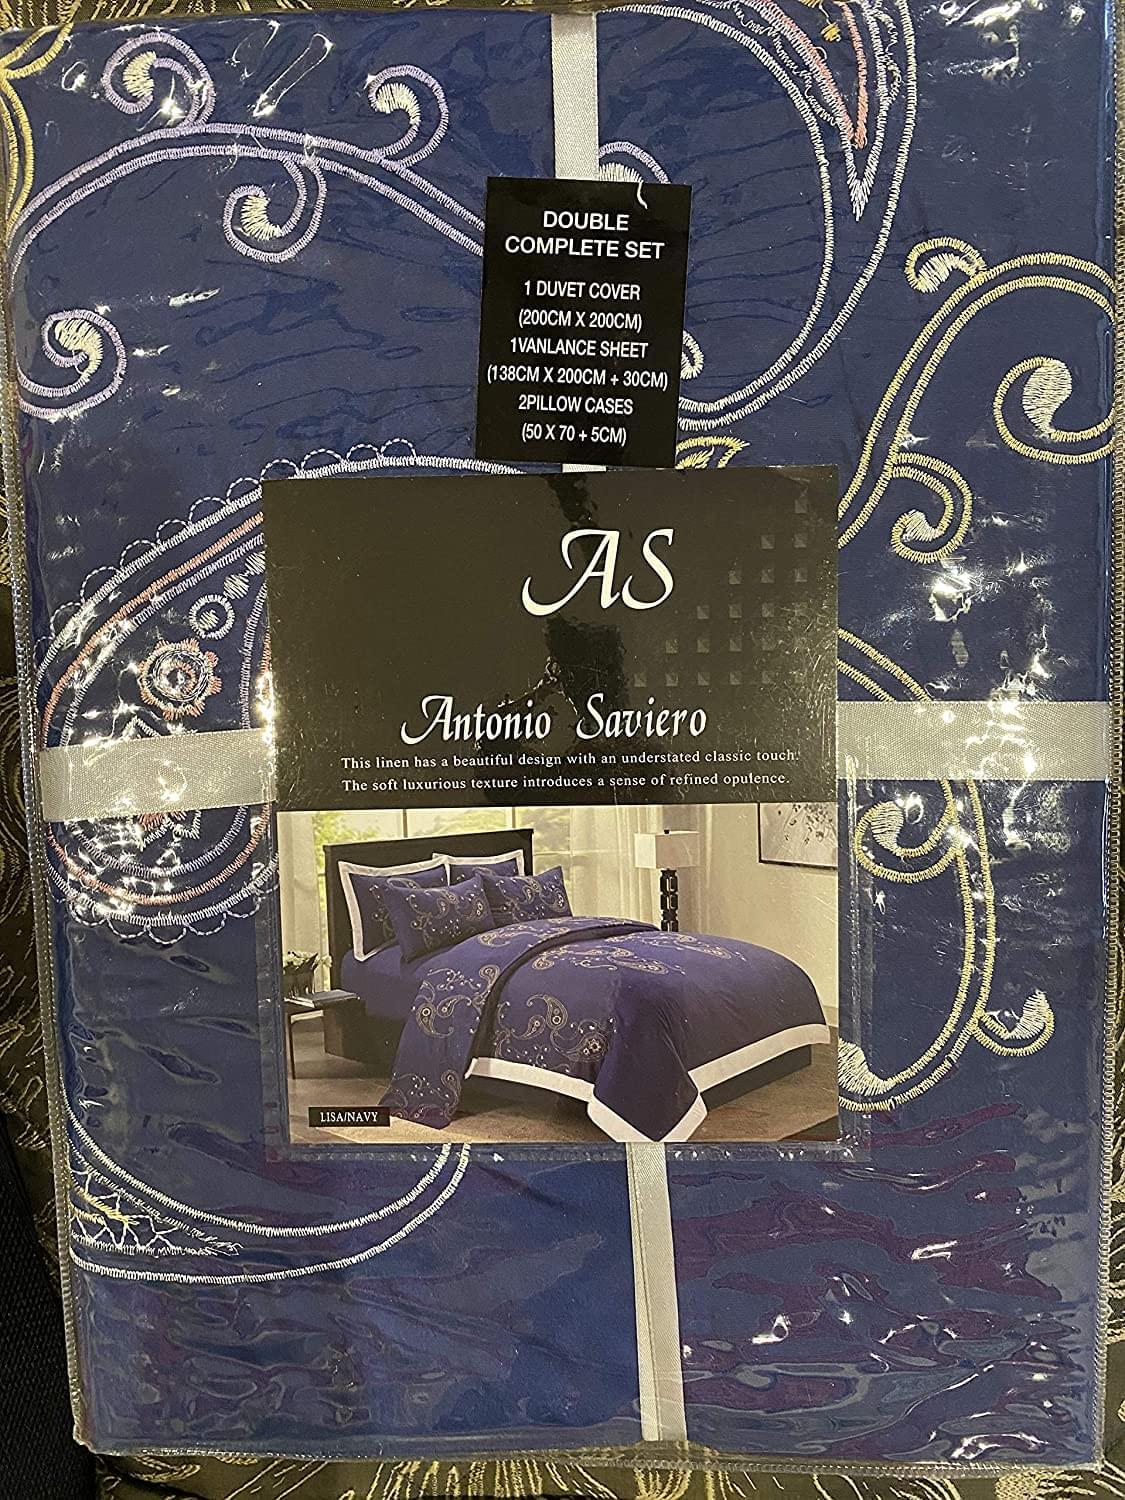 Antonio Saviero 4 Piece Complete Double Duvet Cover Bed Sheet Set Throw In Navy Blue Colour 200 x 200 cm Antonio Saviero